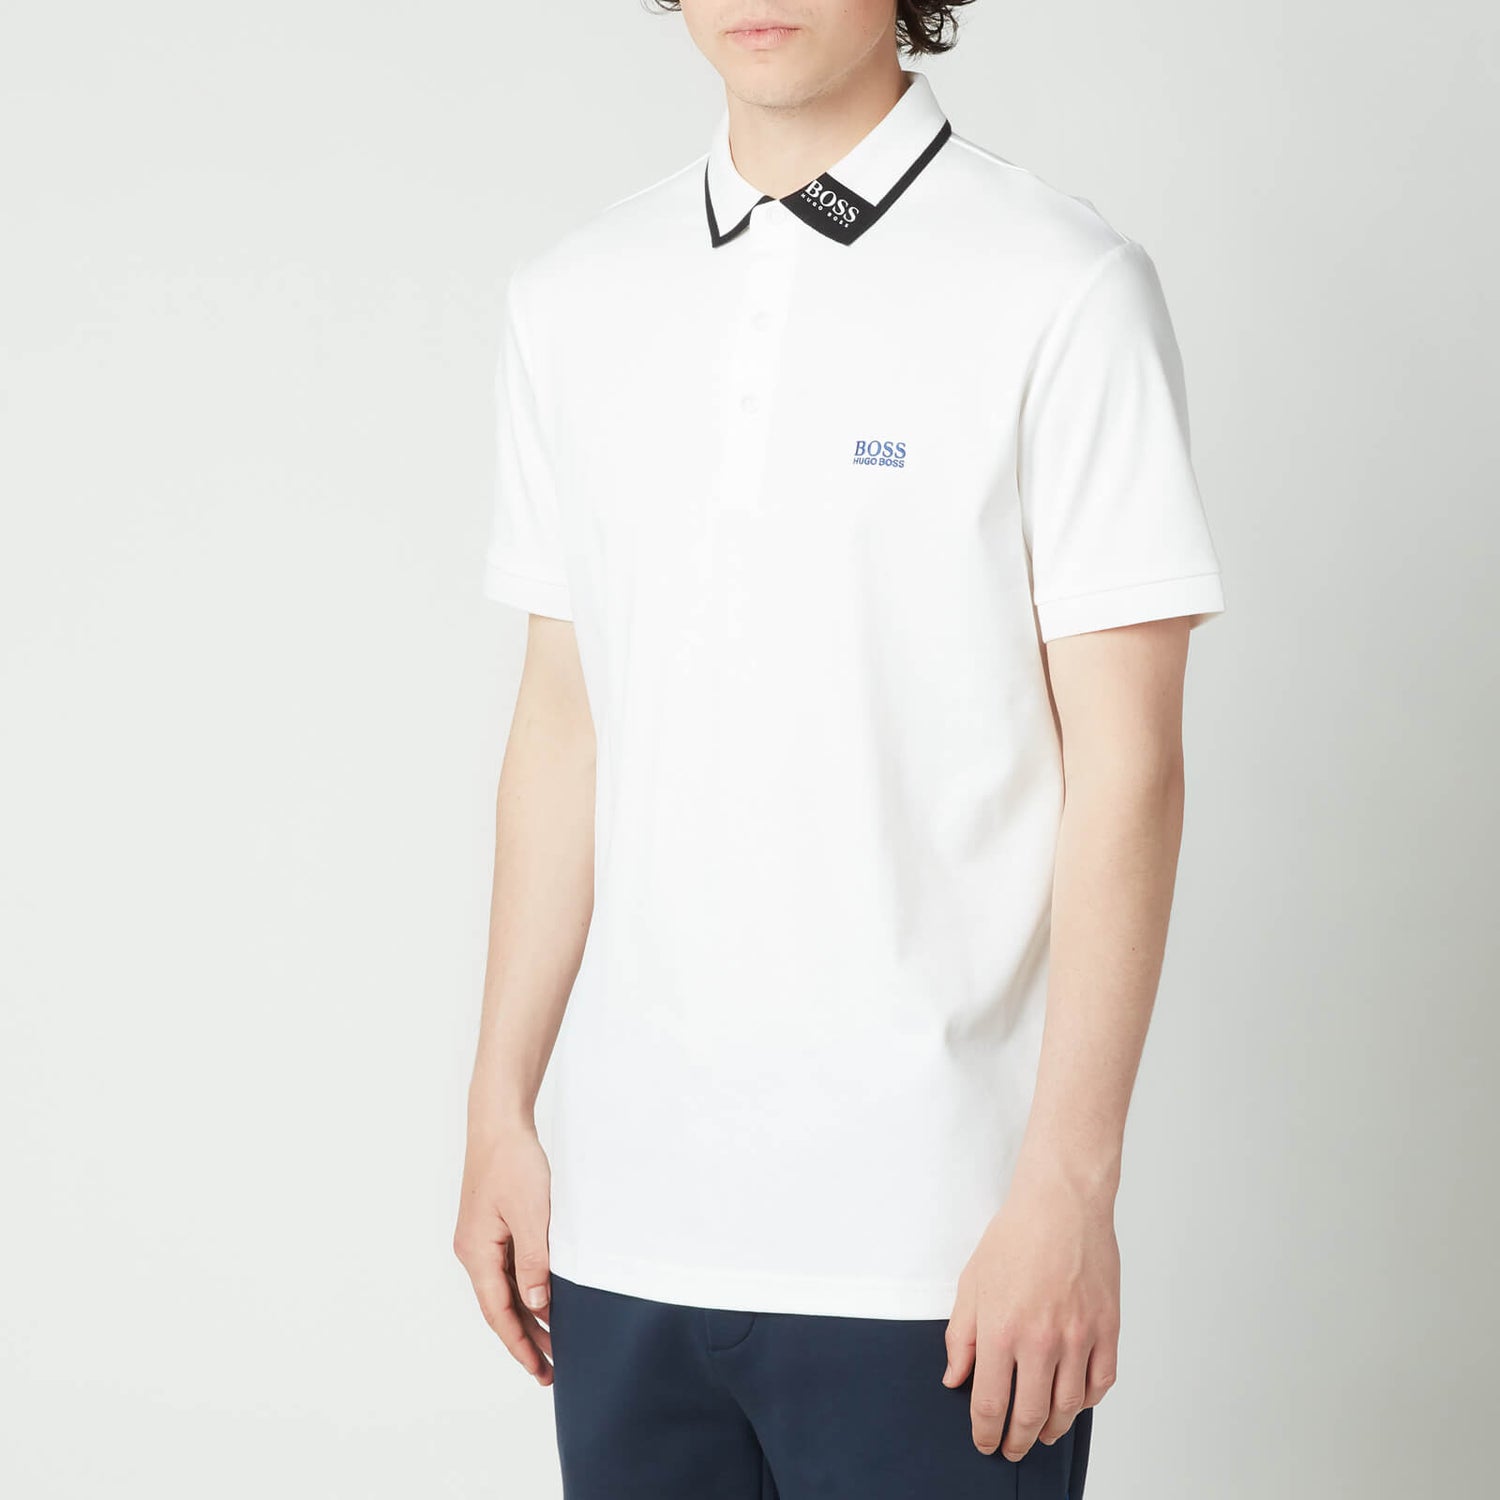 BOSS Athleisure Men's Paule 1 Contrast Collar Slim Fit Polo-Shirt - White